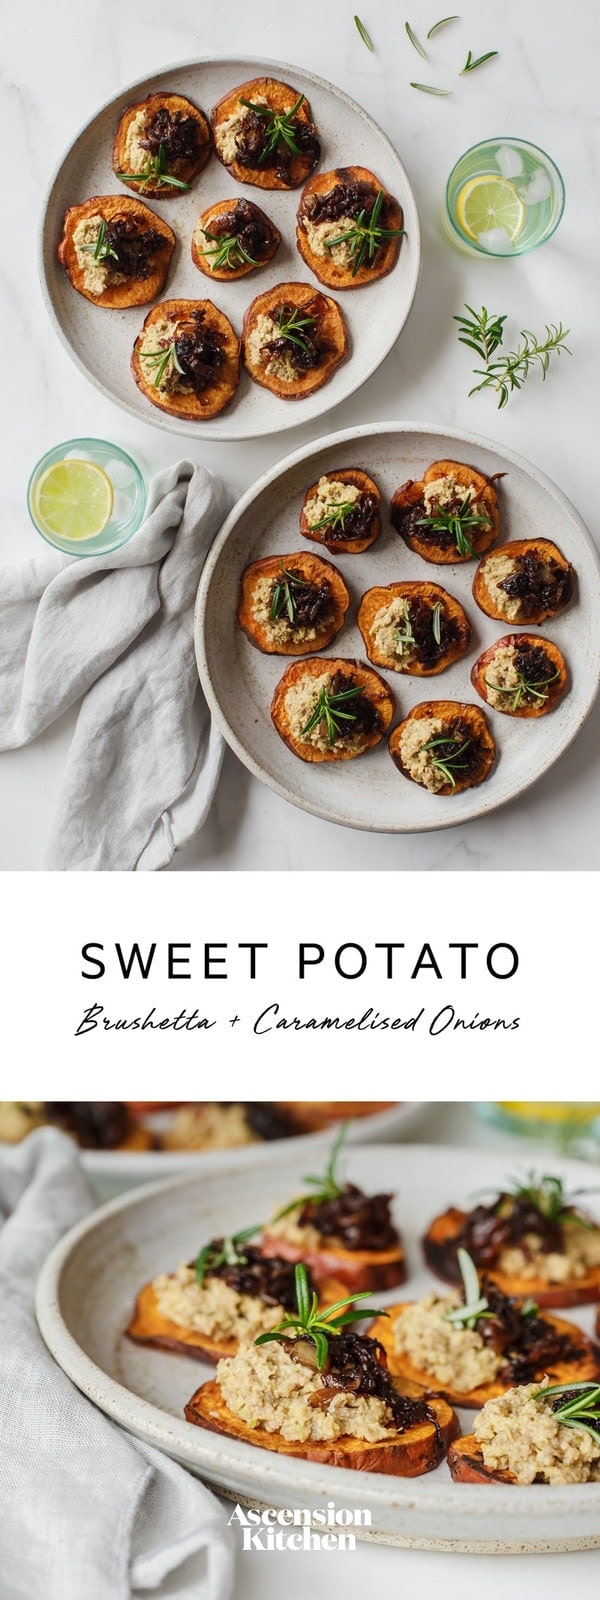 Sweet Potato Bruschetta with Caramelised Onion